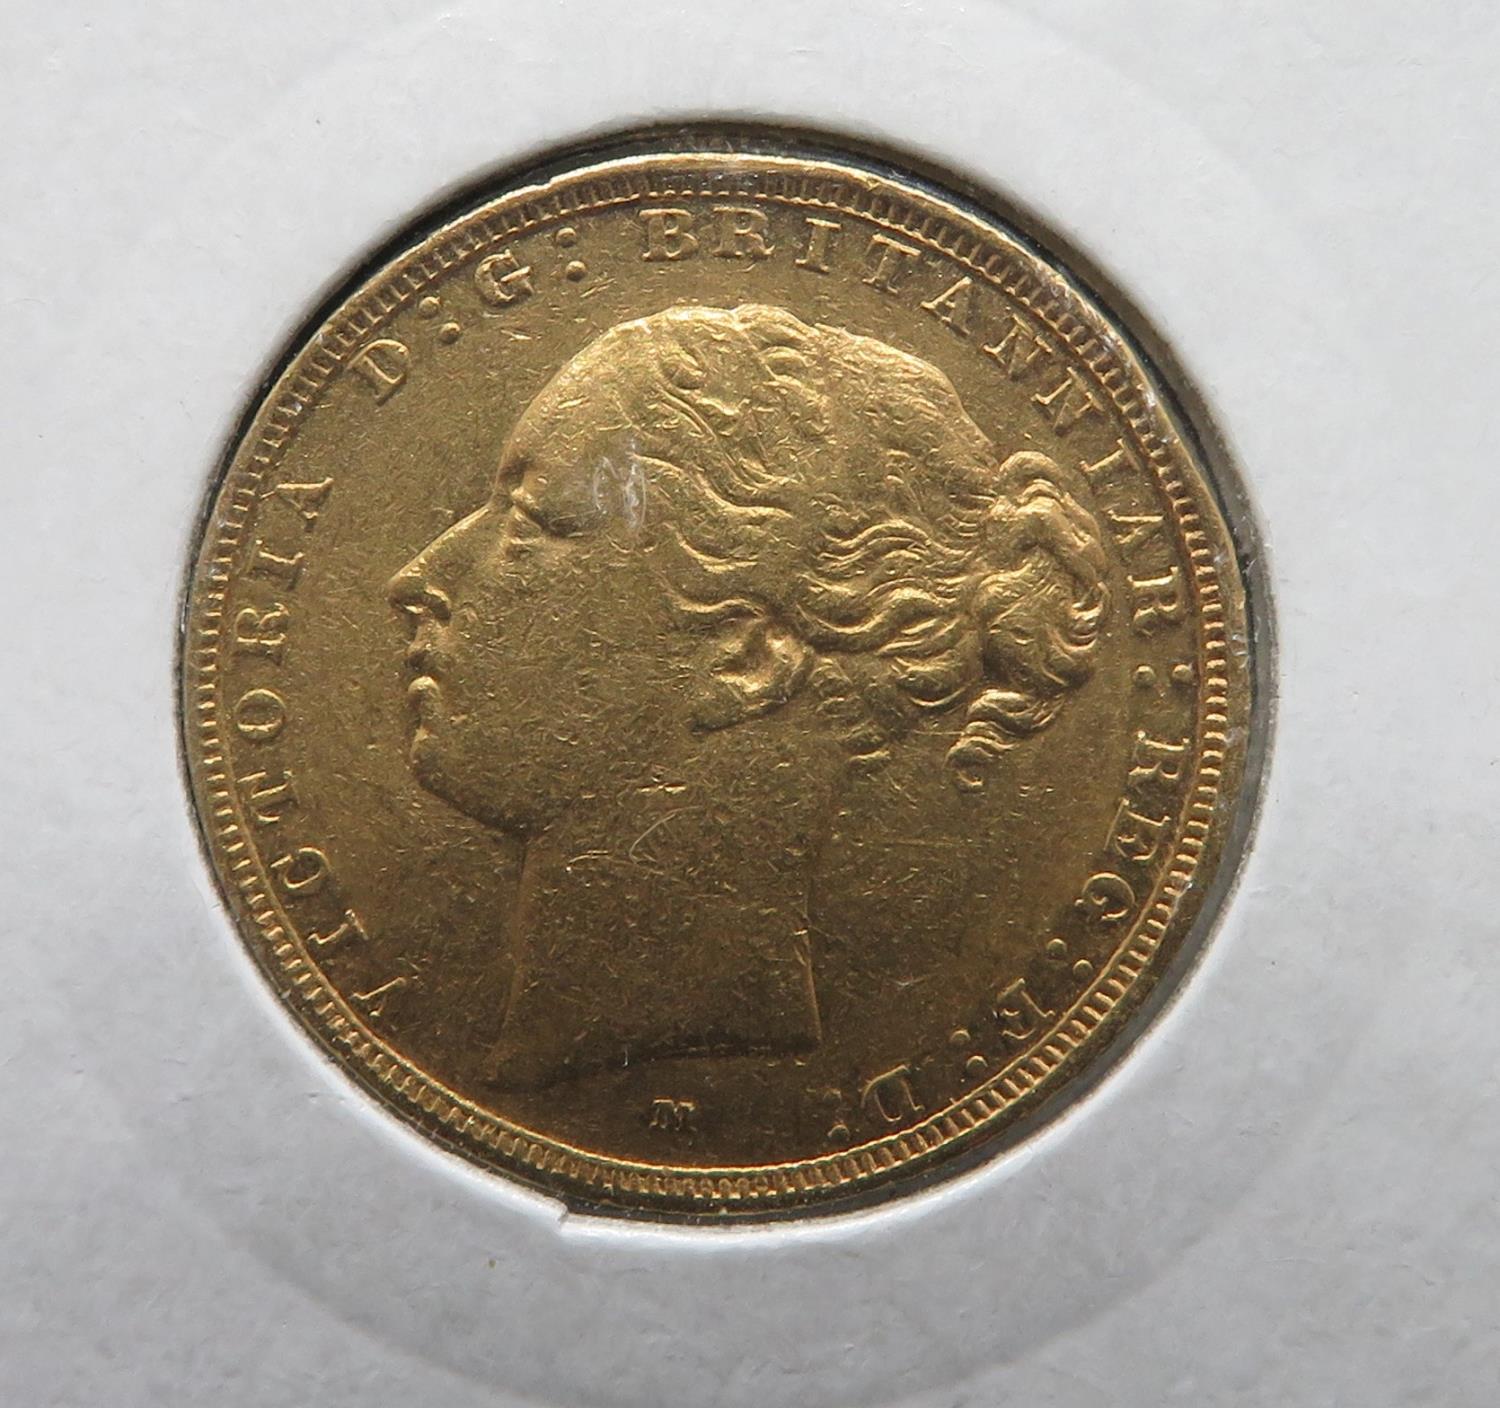 22ct 1884 Bunhead Melbourne Mint full sovereign